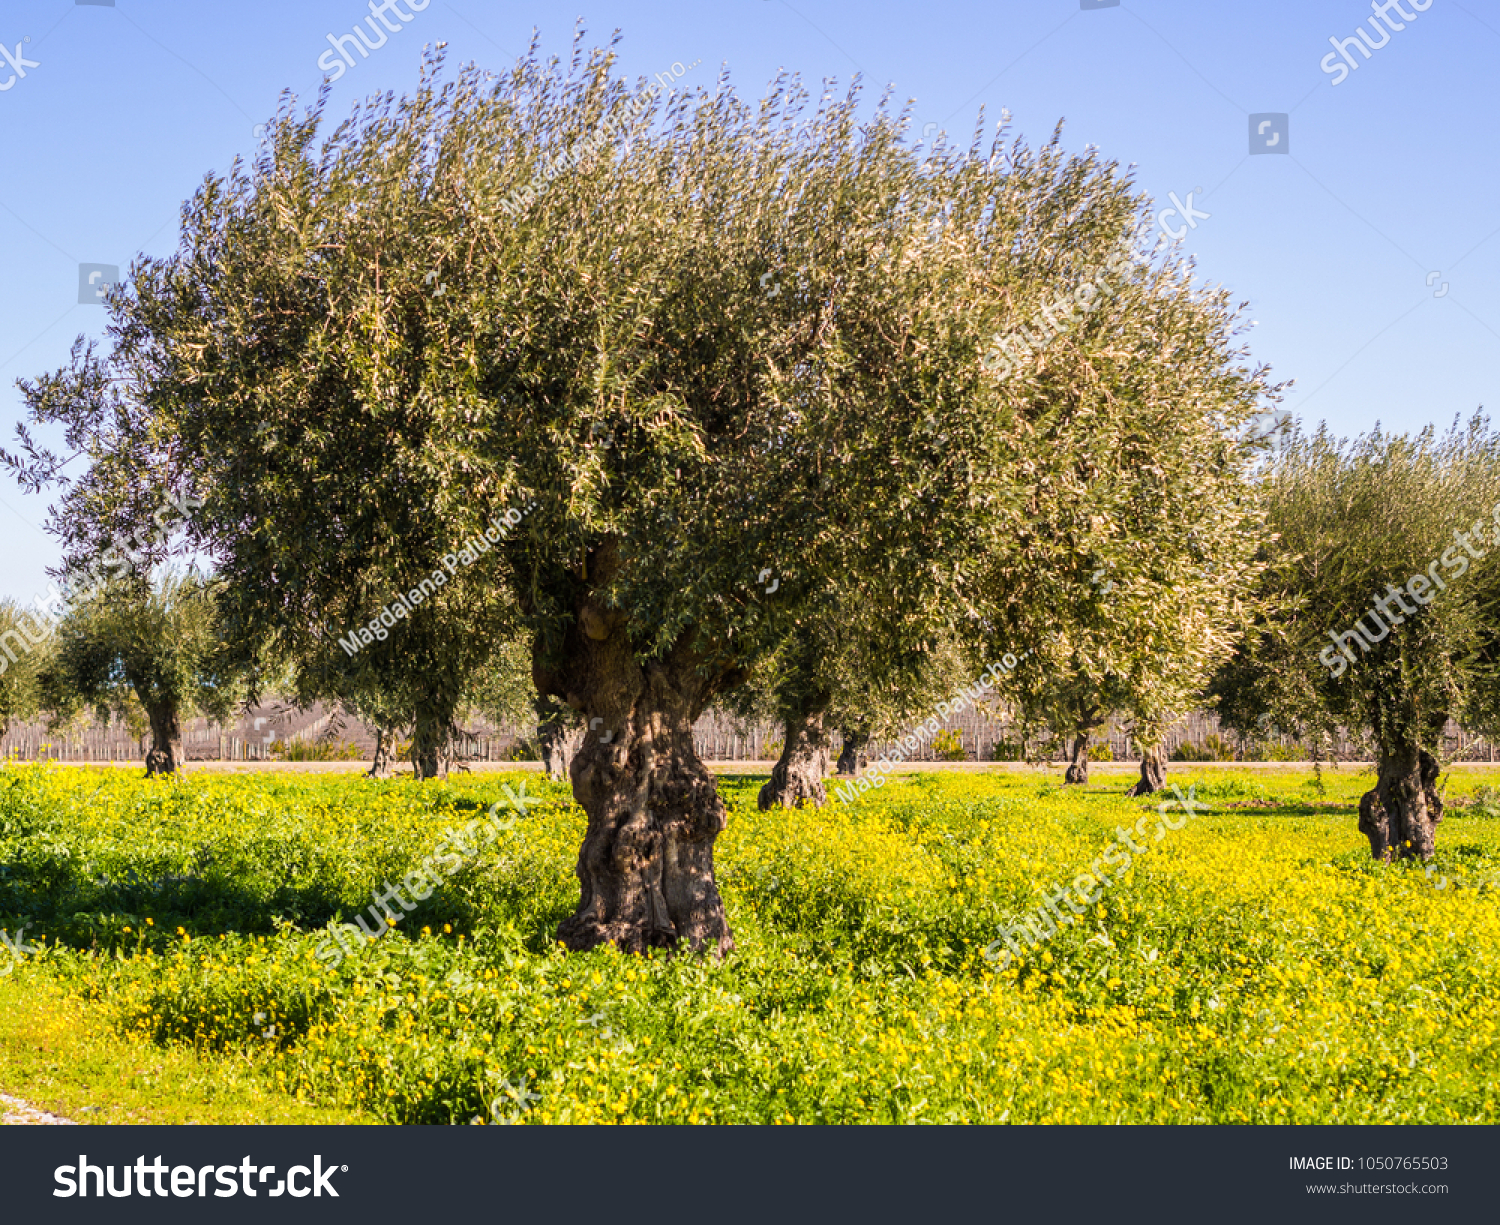 Olive trees (olea europaea) in Alentejo region, Portugal #1050765503